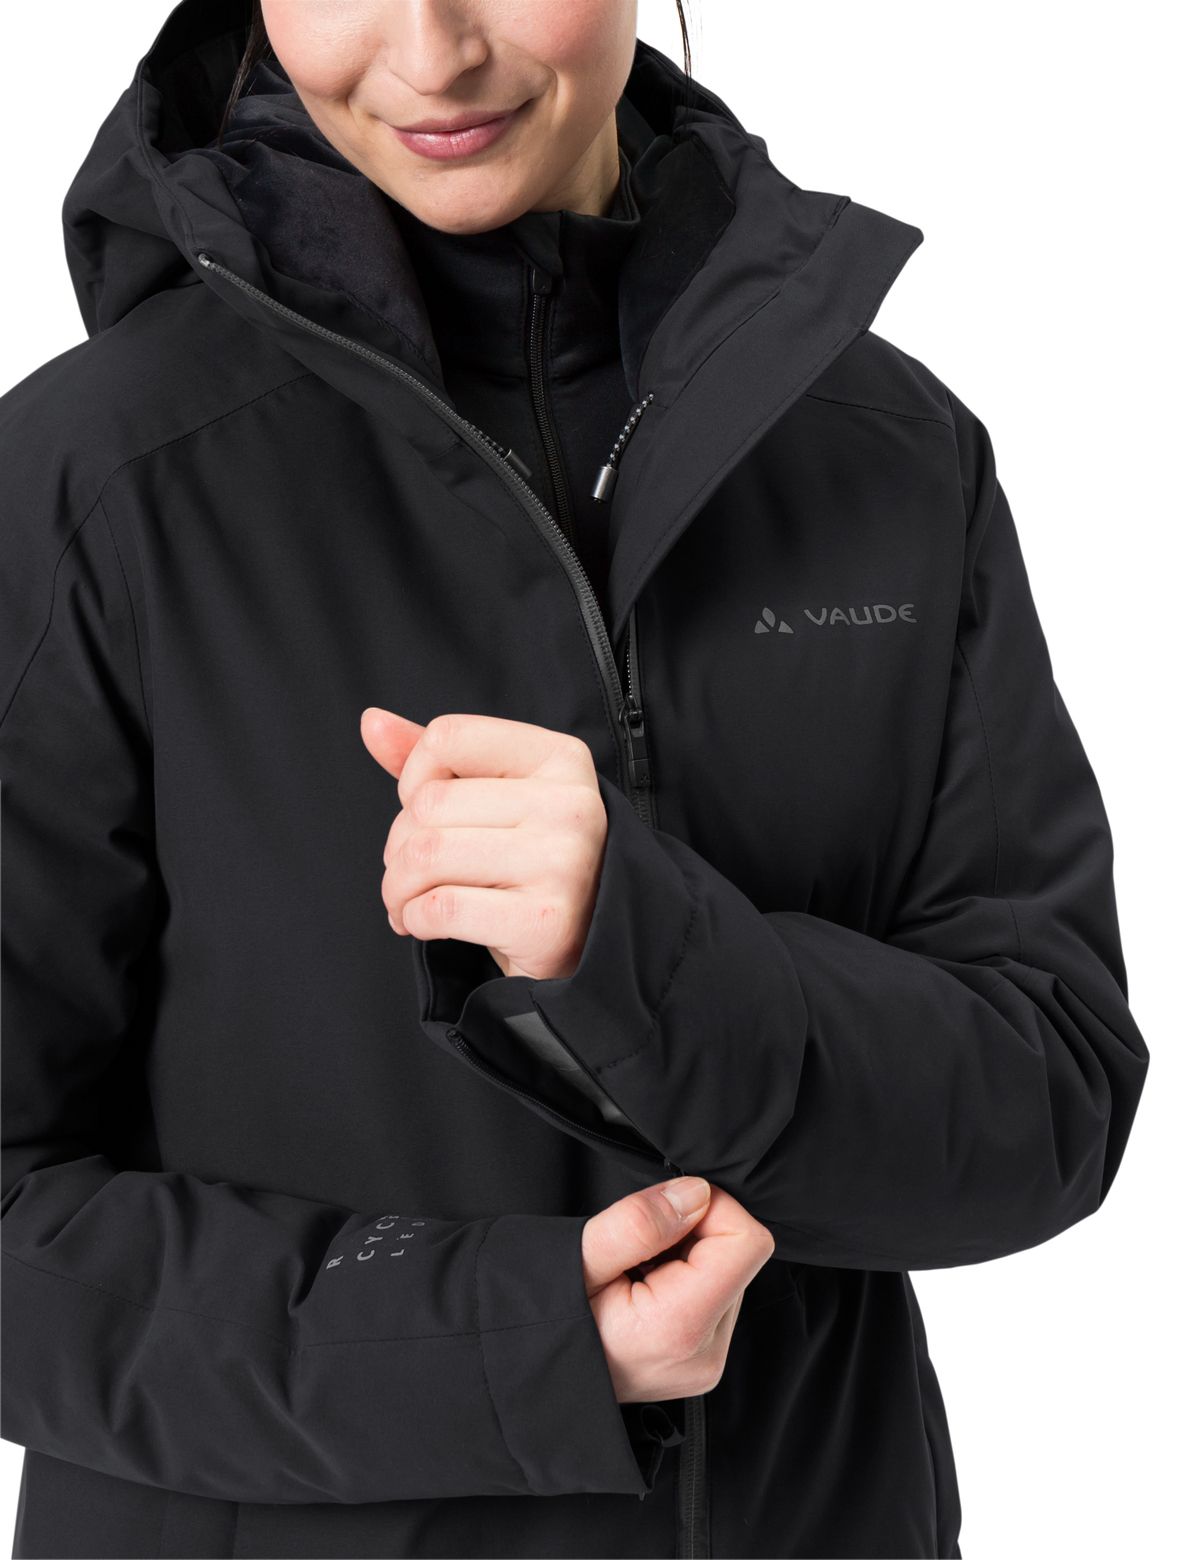 Vaude W's Mineo Coat III - Recycled Polyester Black Jacket